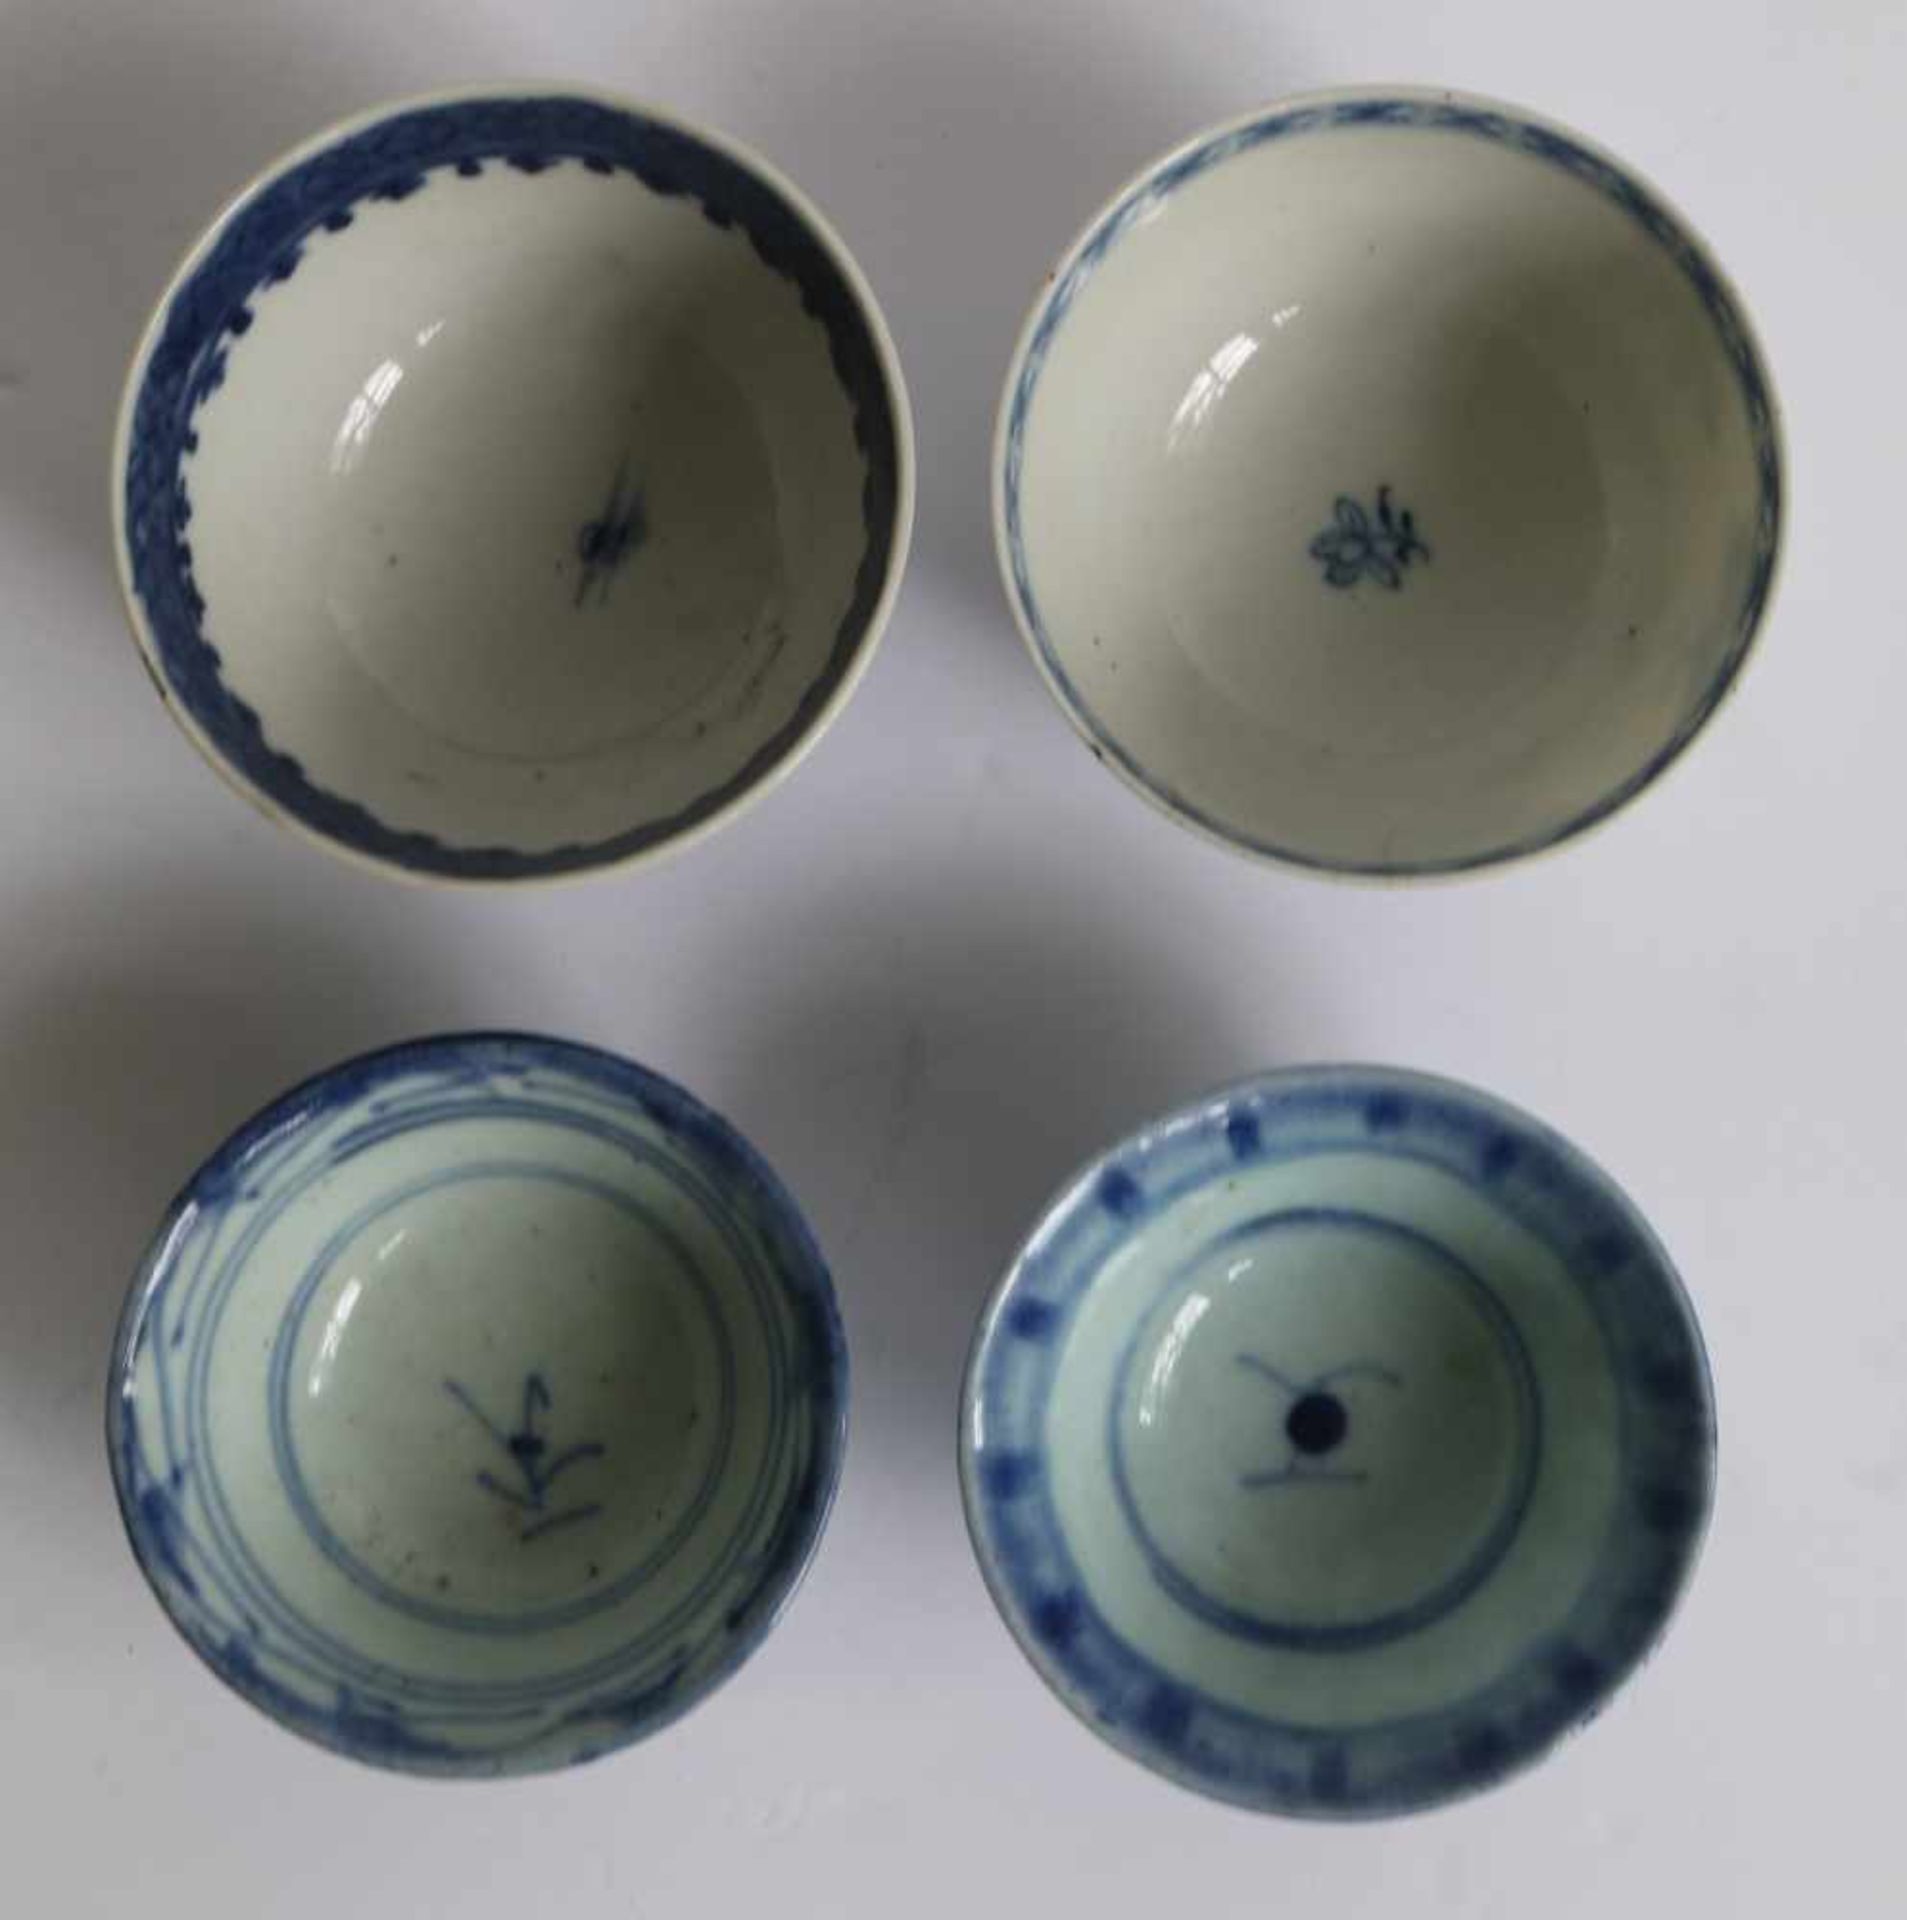 Asian figurine with 4 Chinese cups Chinese lot H 3,5, 5,5 en 12,5 cm dia 8 en 8,5 cm - Bild 4 aus 5